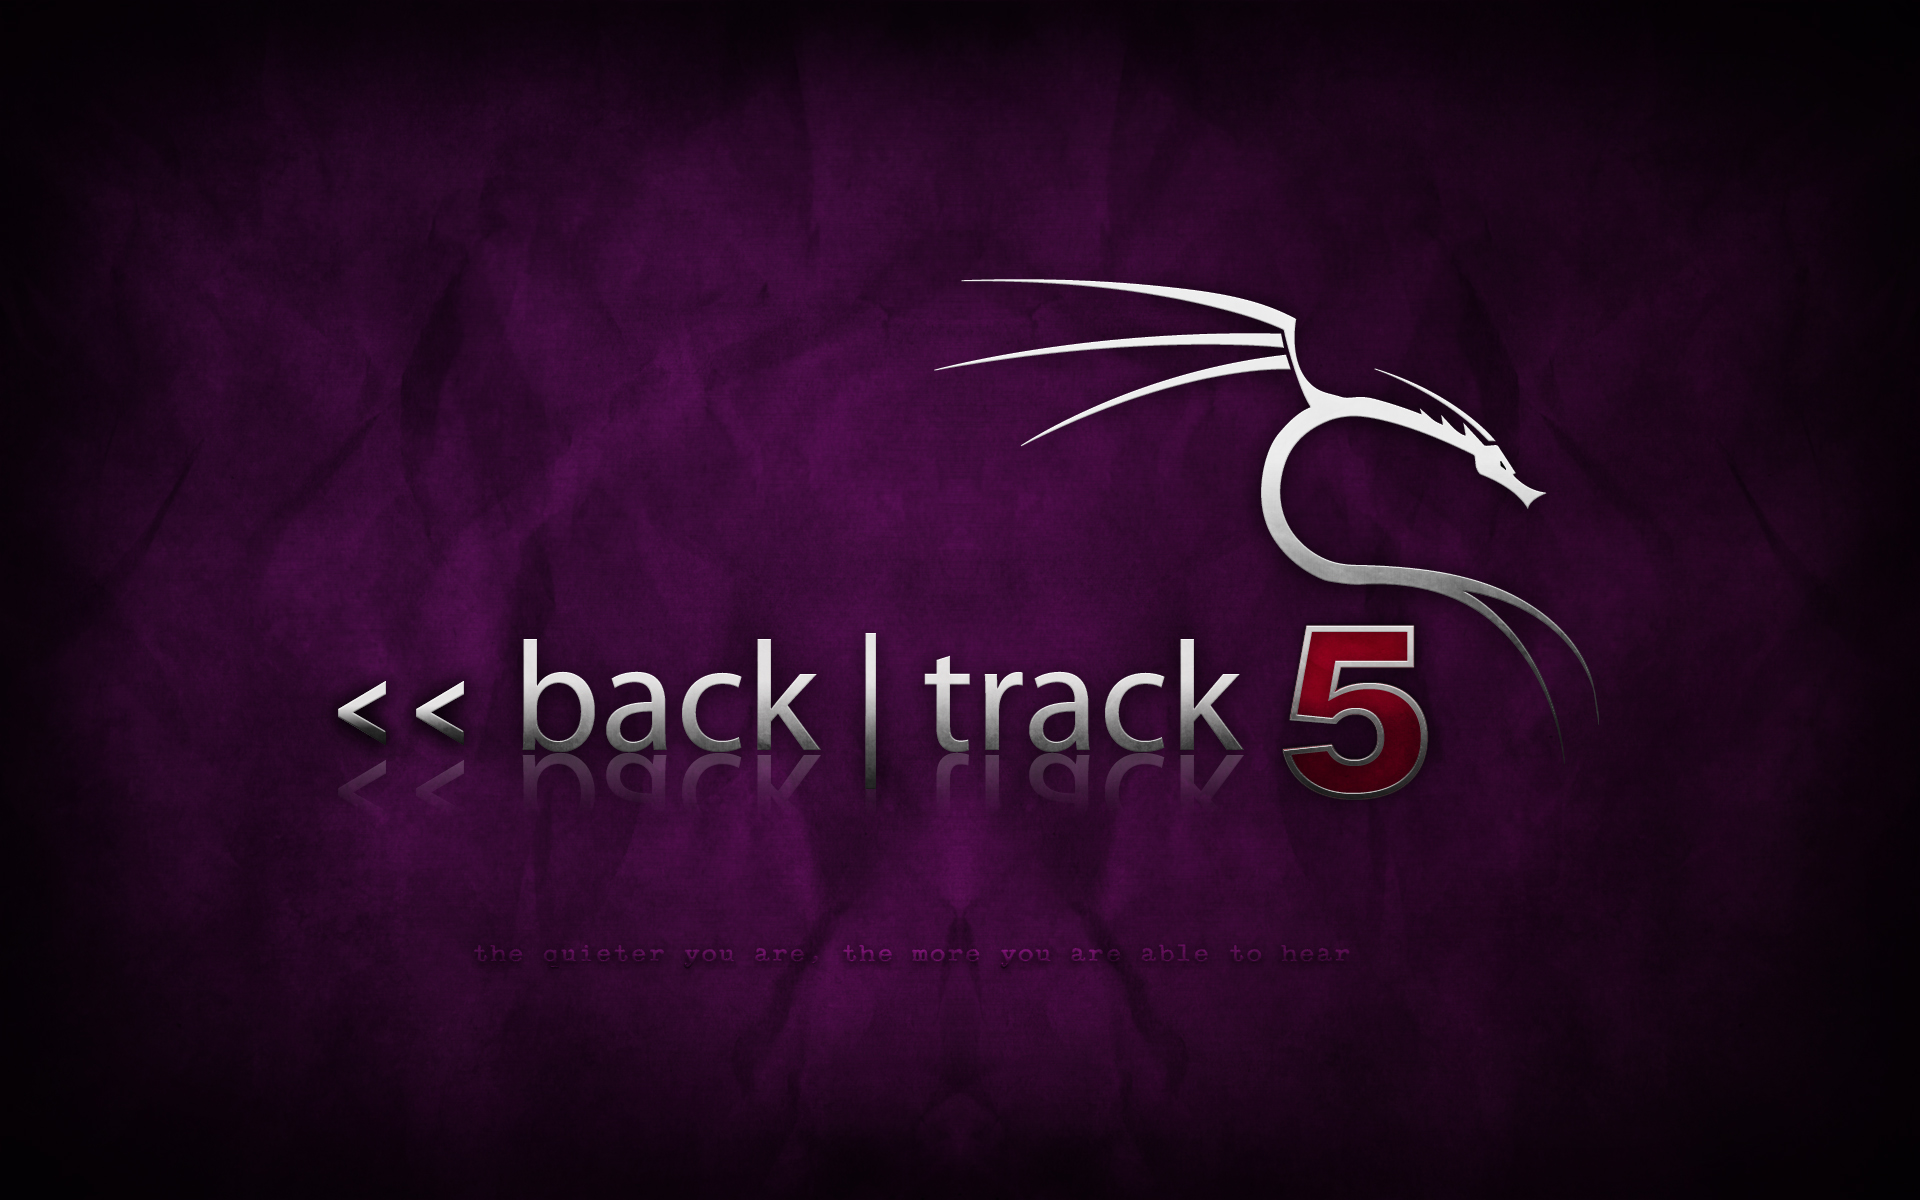 backtrack-5-purple-2.png